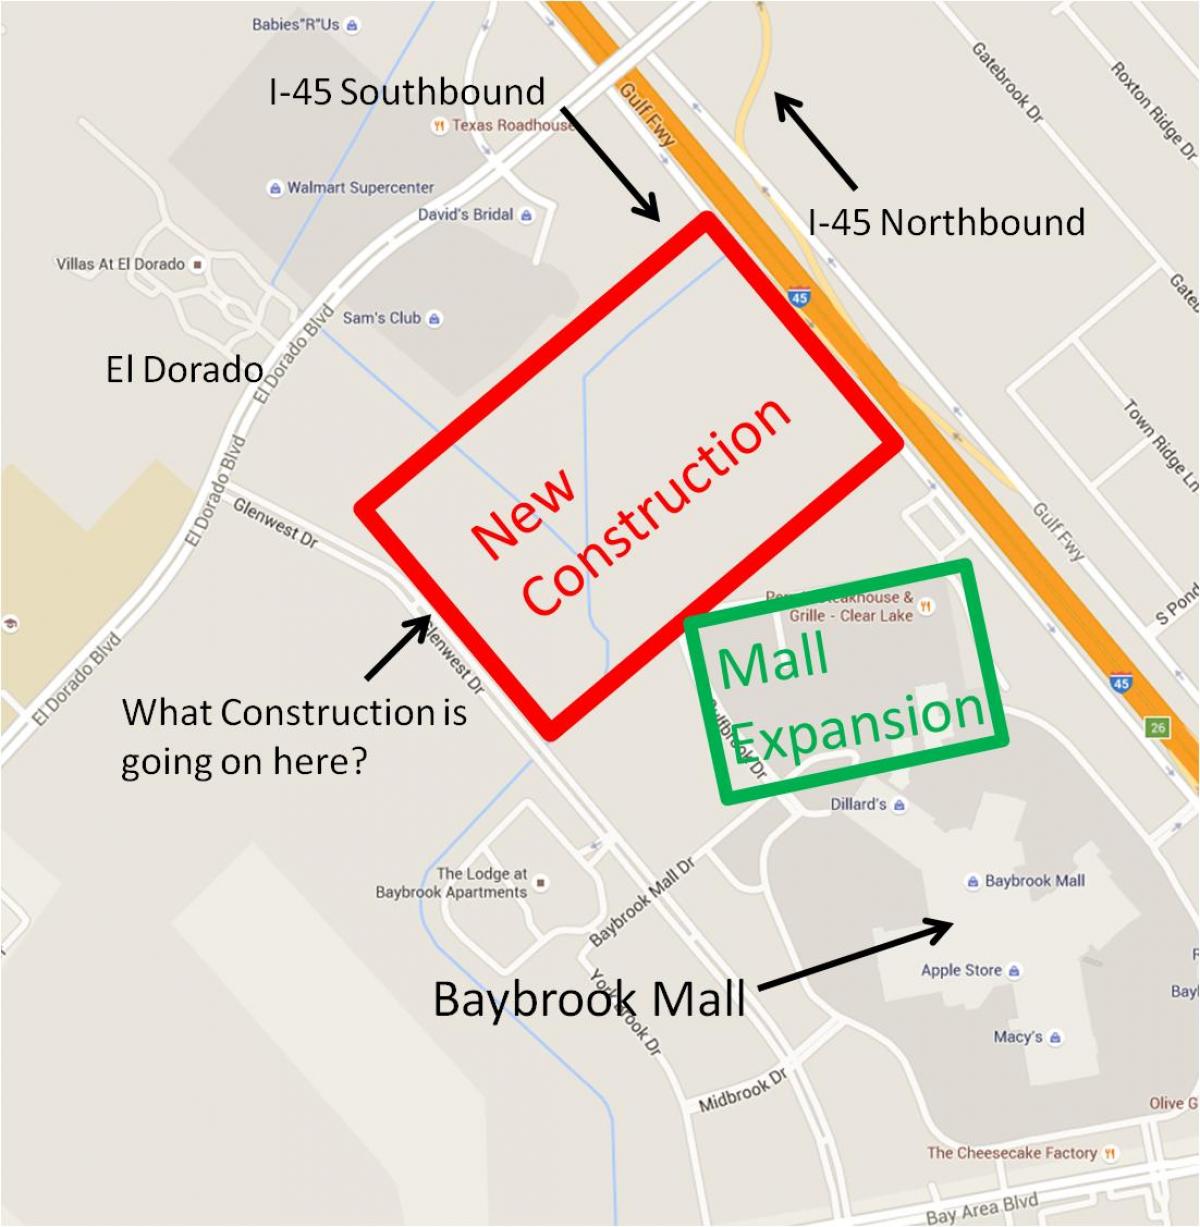 zemljevid Baybrook center